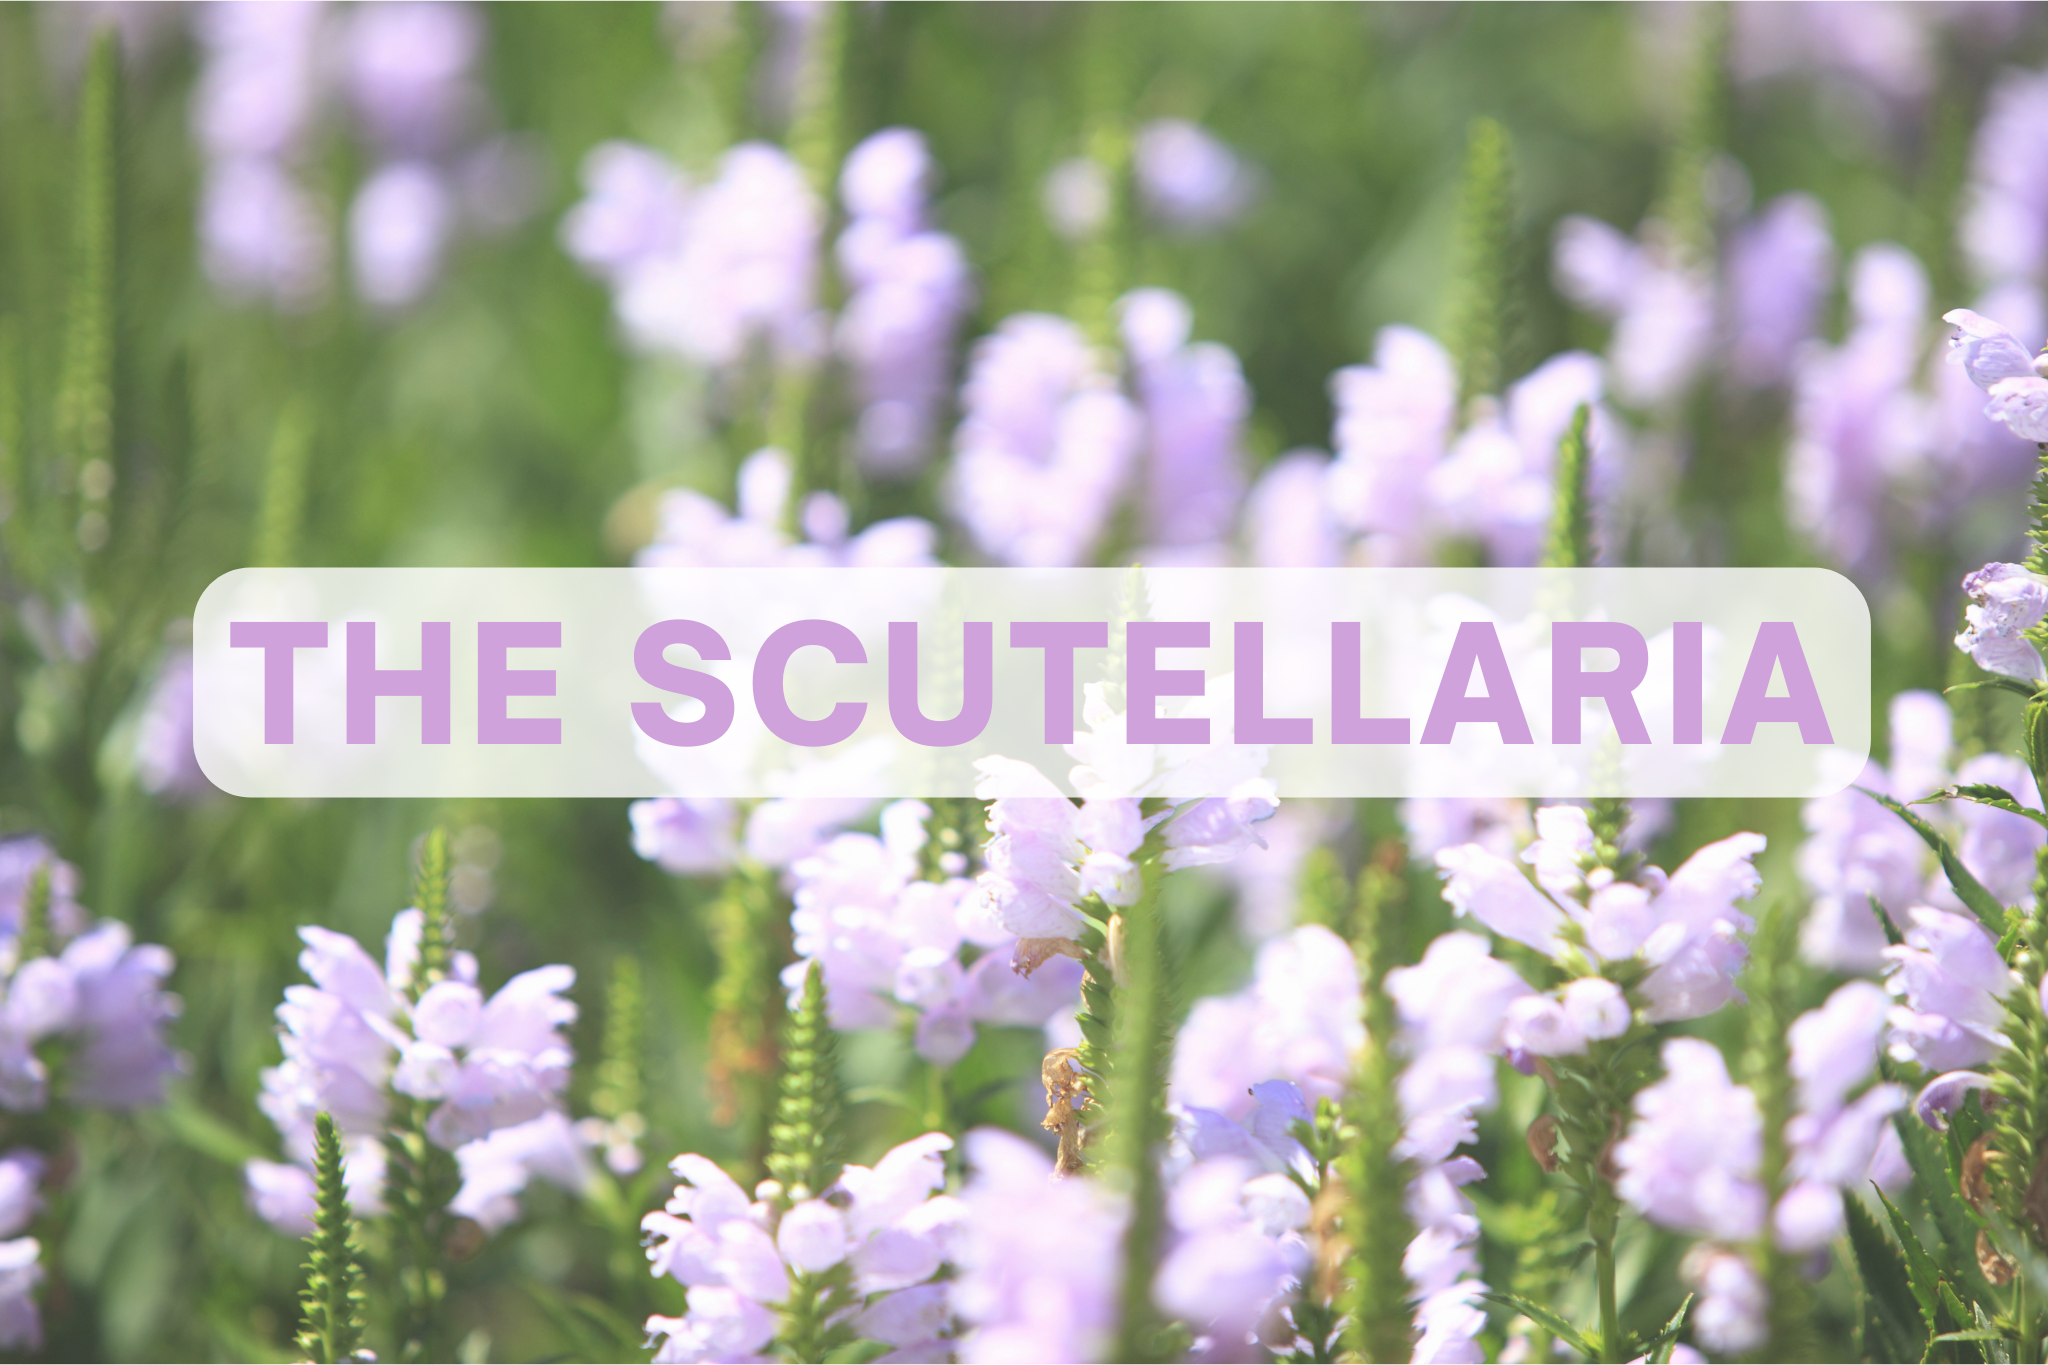 The scutellaria